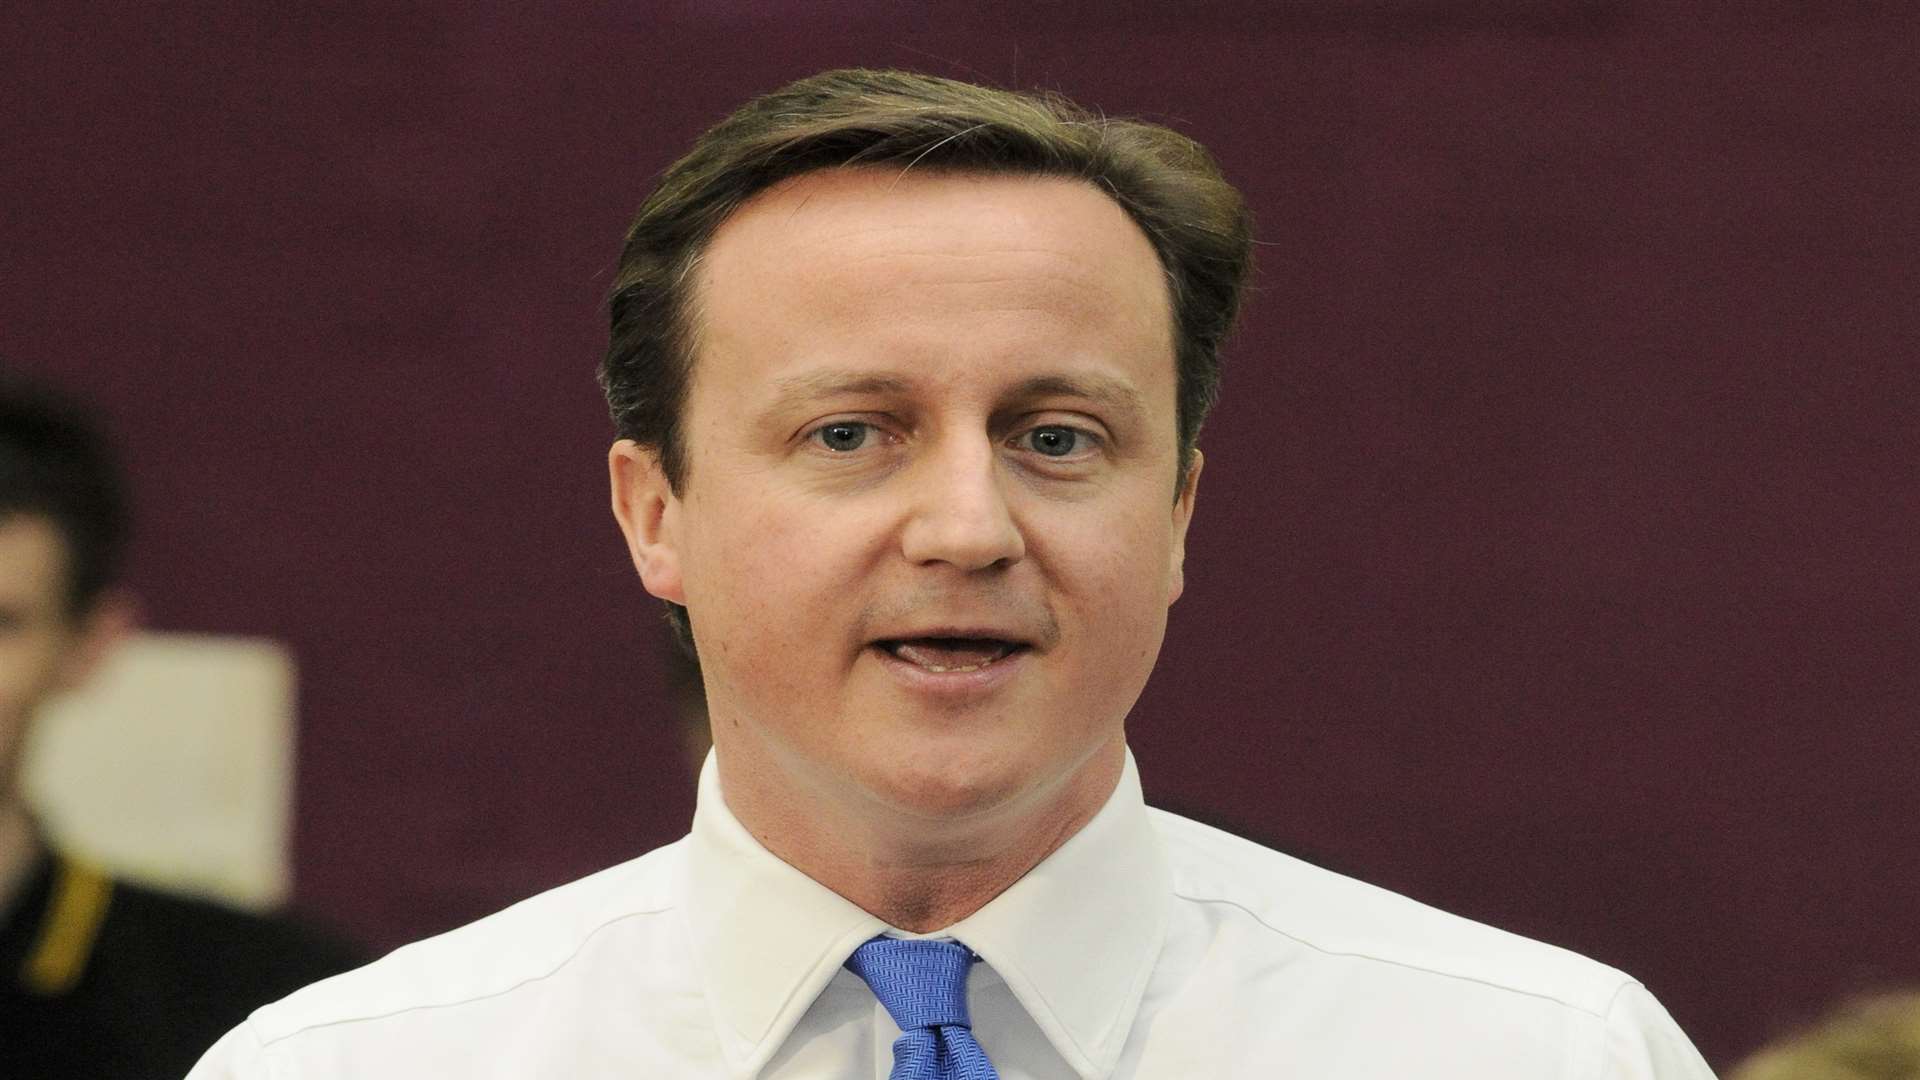 Prime Minister David Cameron has pledged 500 free schools